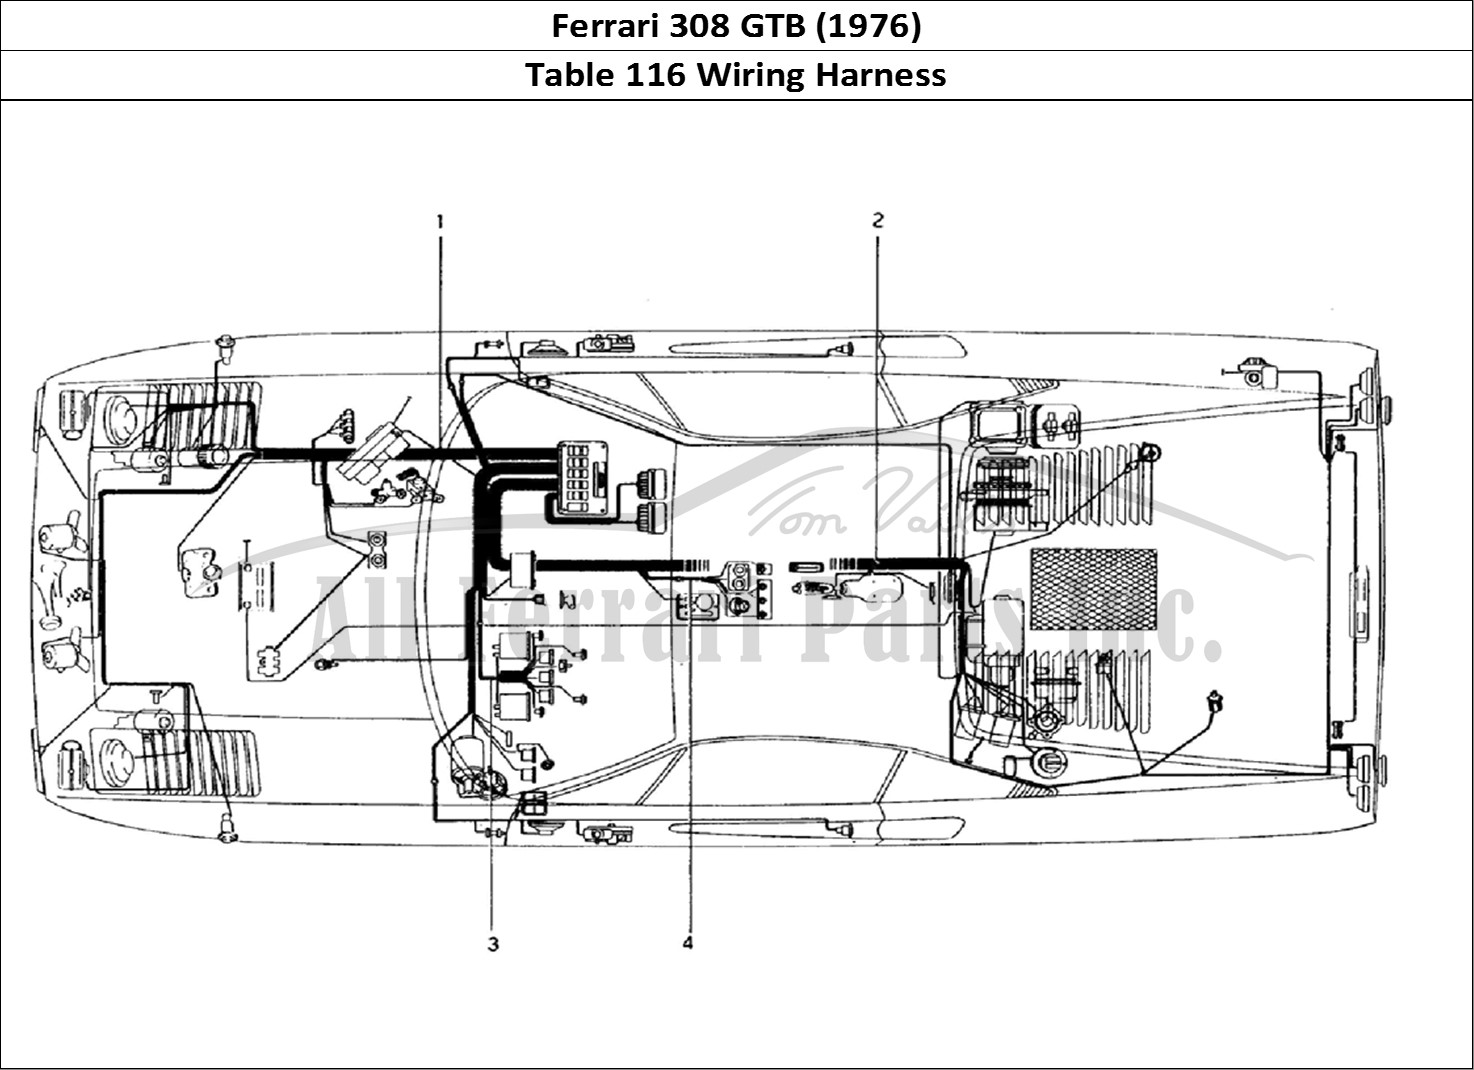 Ferrari Parts Ferrari 308 GTB (1976) Page 116 Body Electrical